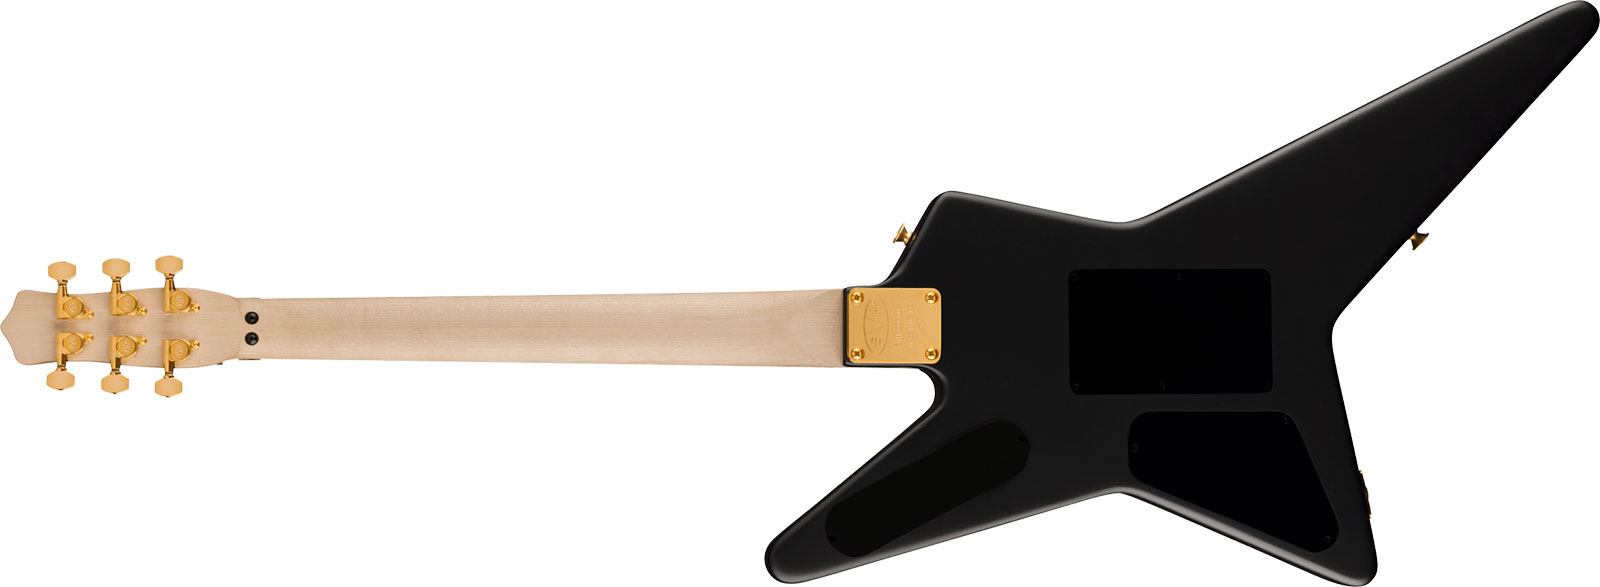 Evh Star Limited Edition 1h Fr Eb - Stealth Black With Gold Hardware - E-Gitarre aus Metall - Variation 1